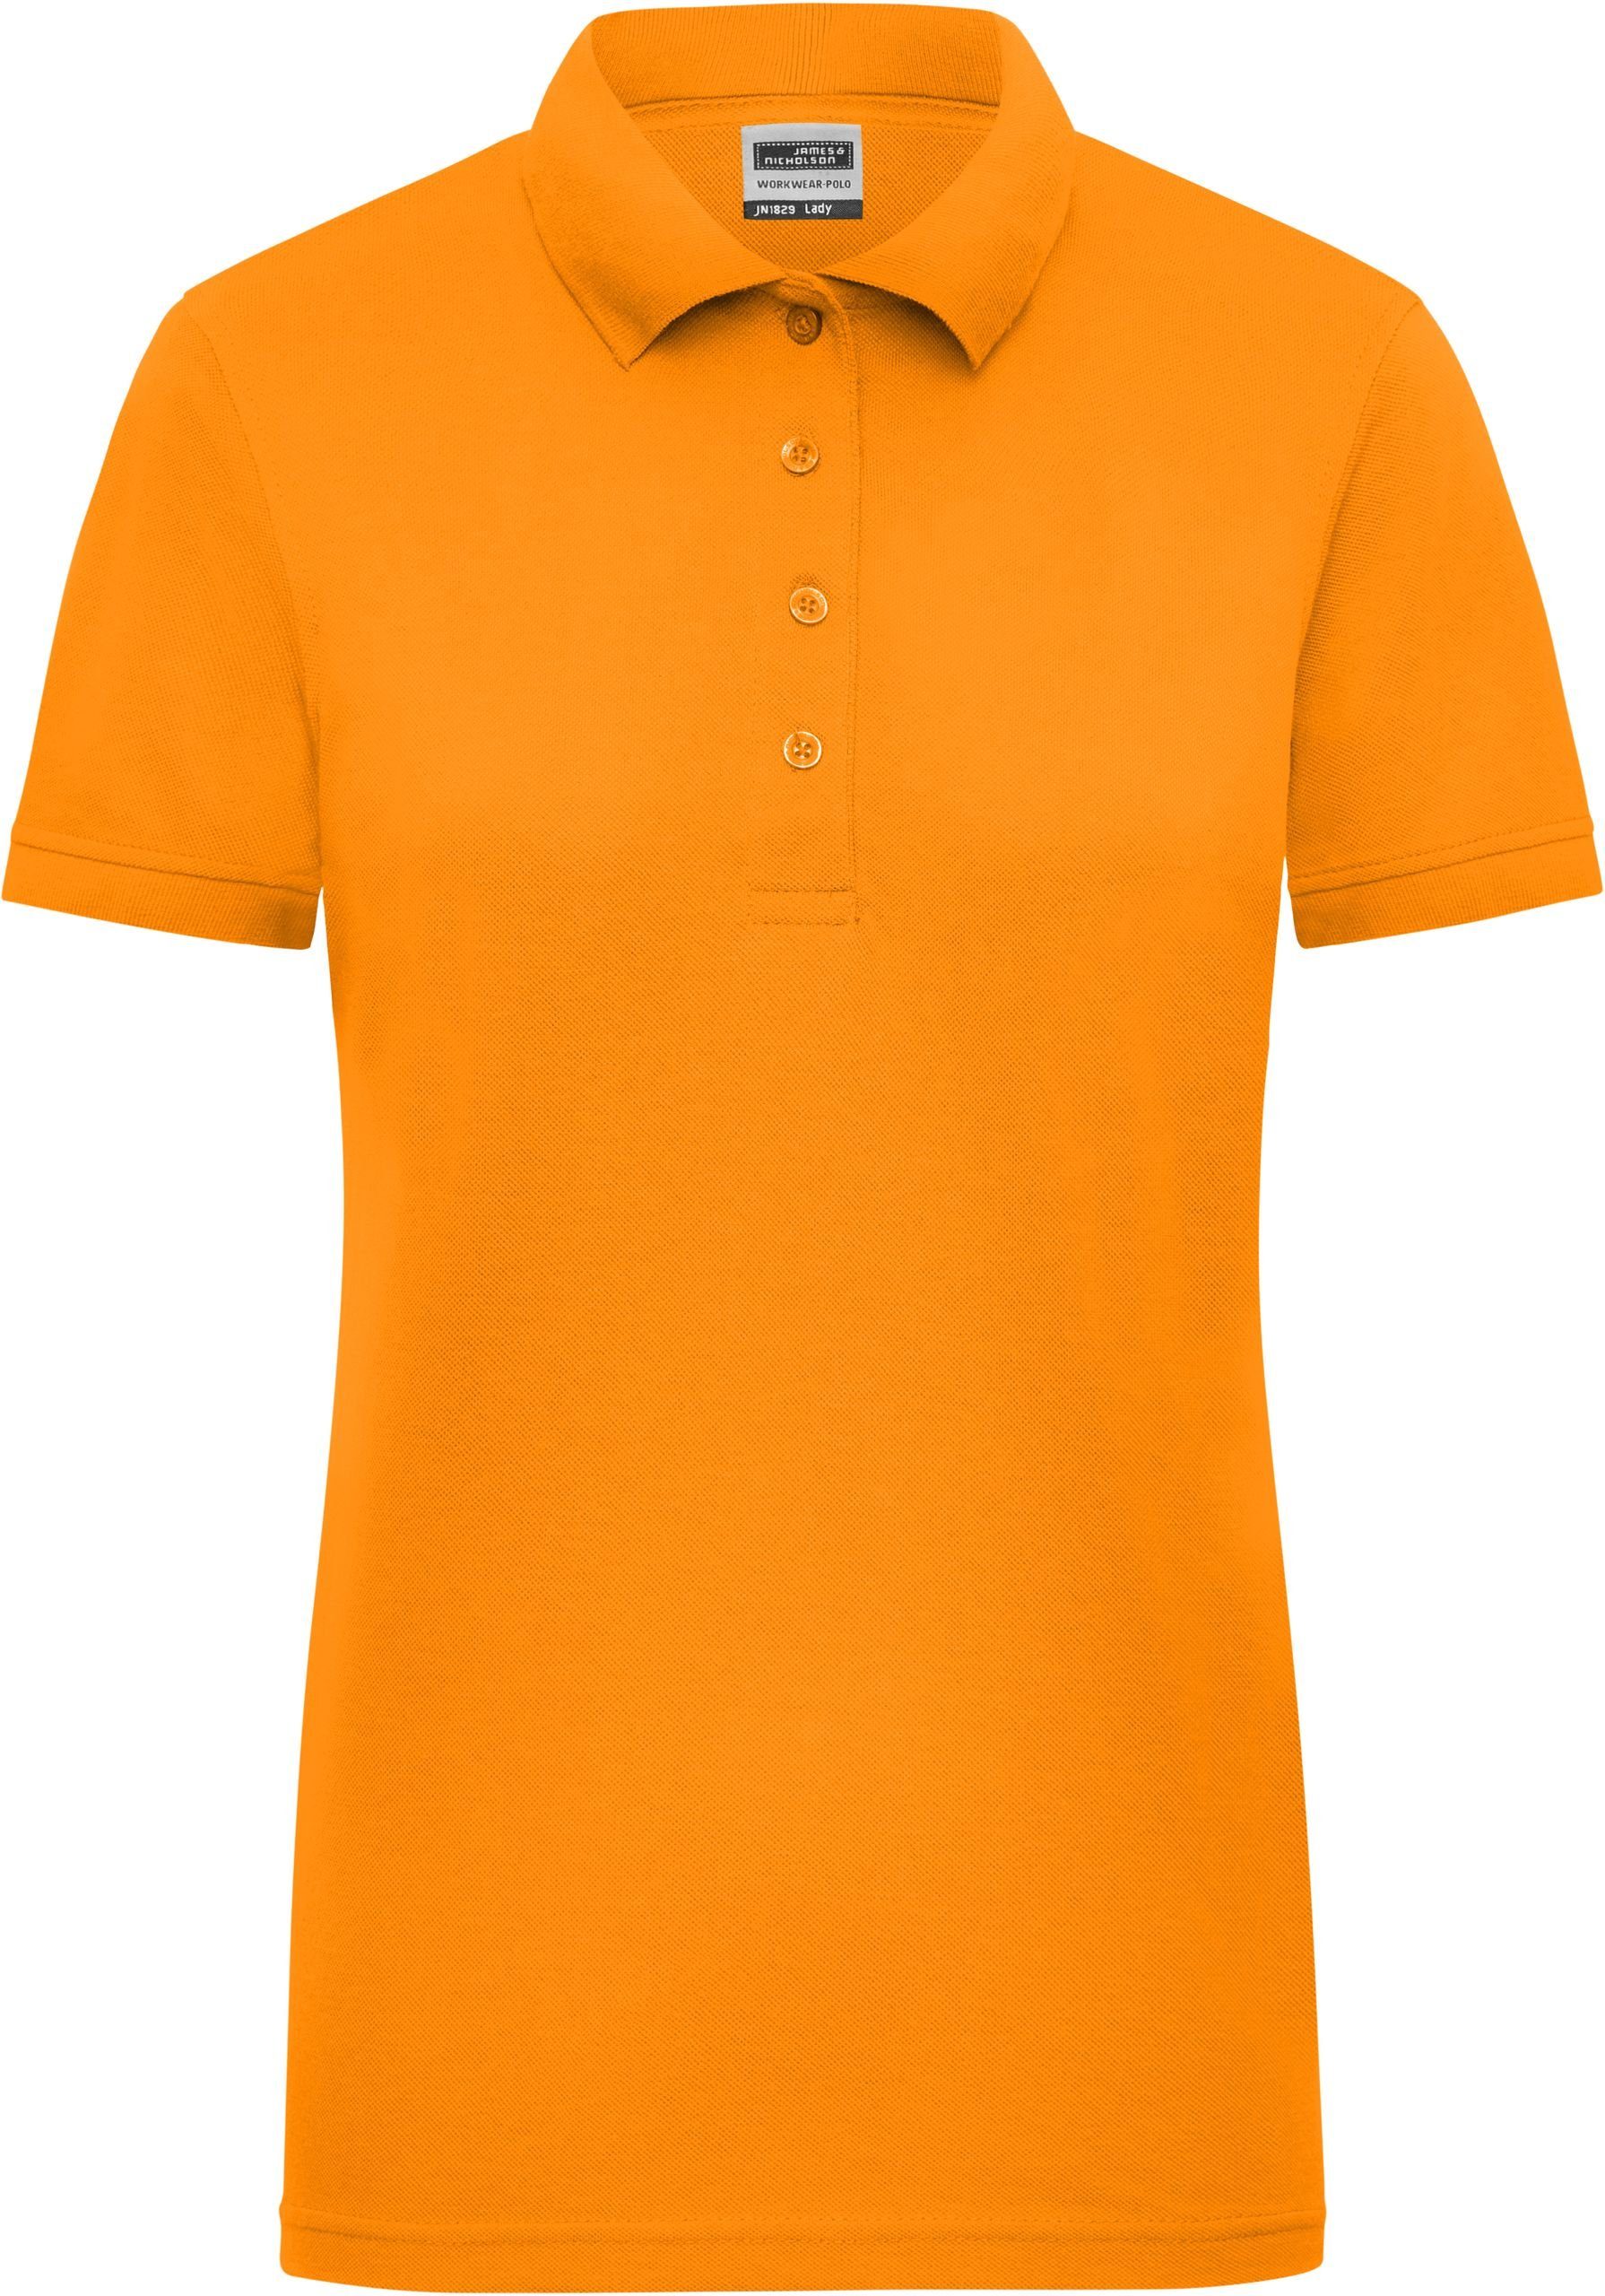 James NEON Workwear ORANGE & Poloshirt Damen Nicholson Polo Signal